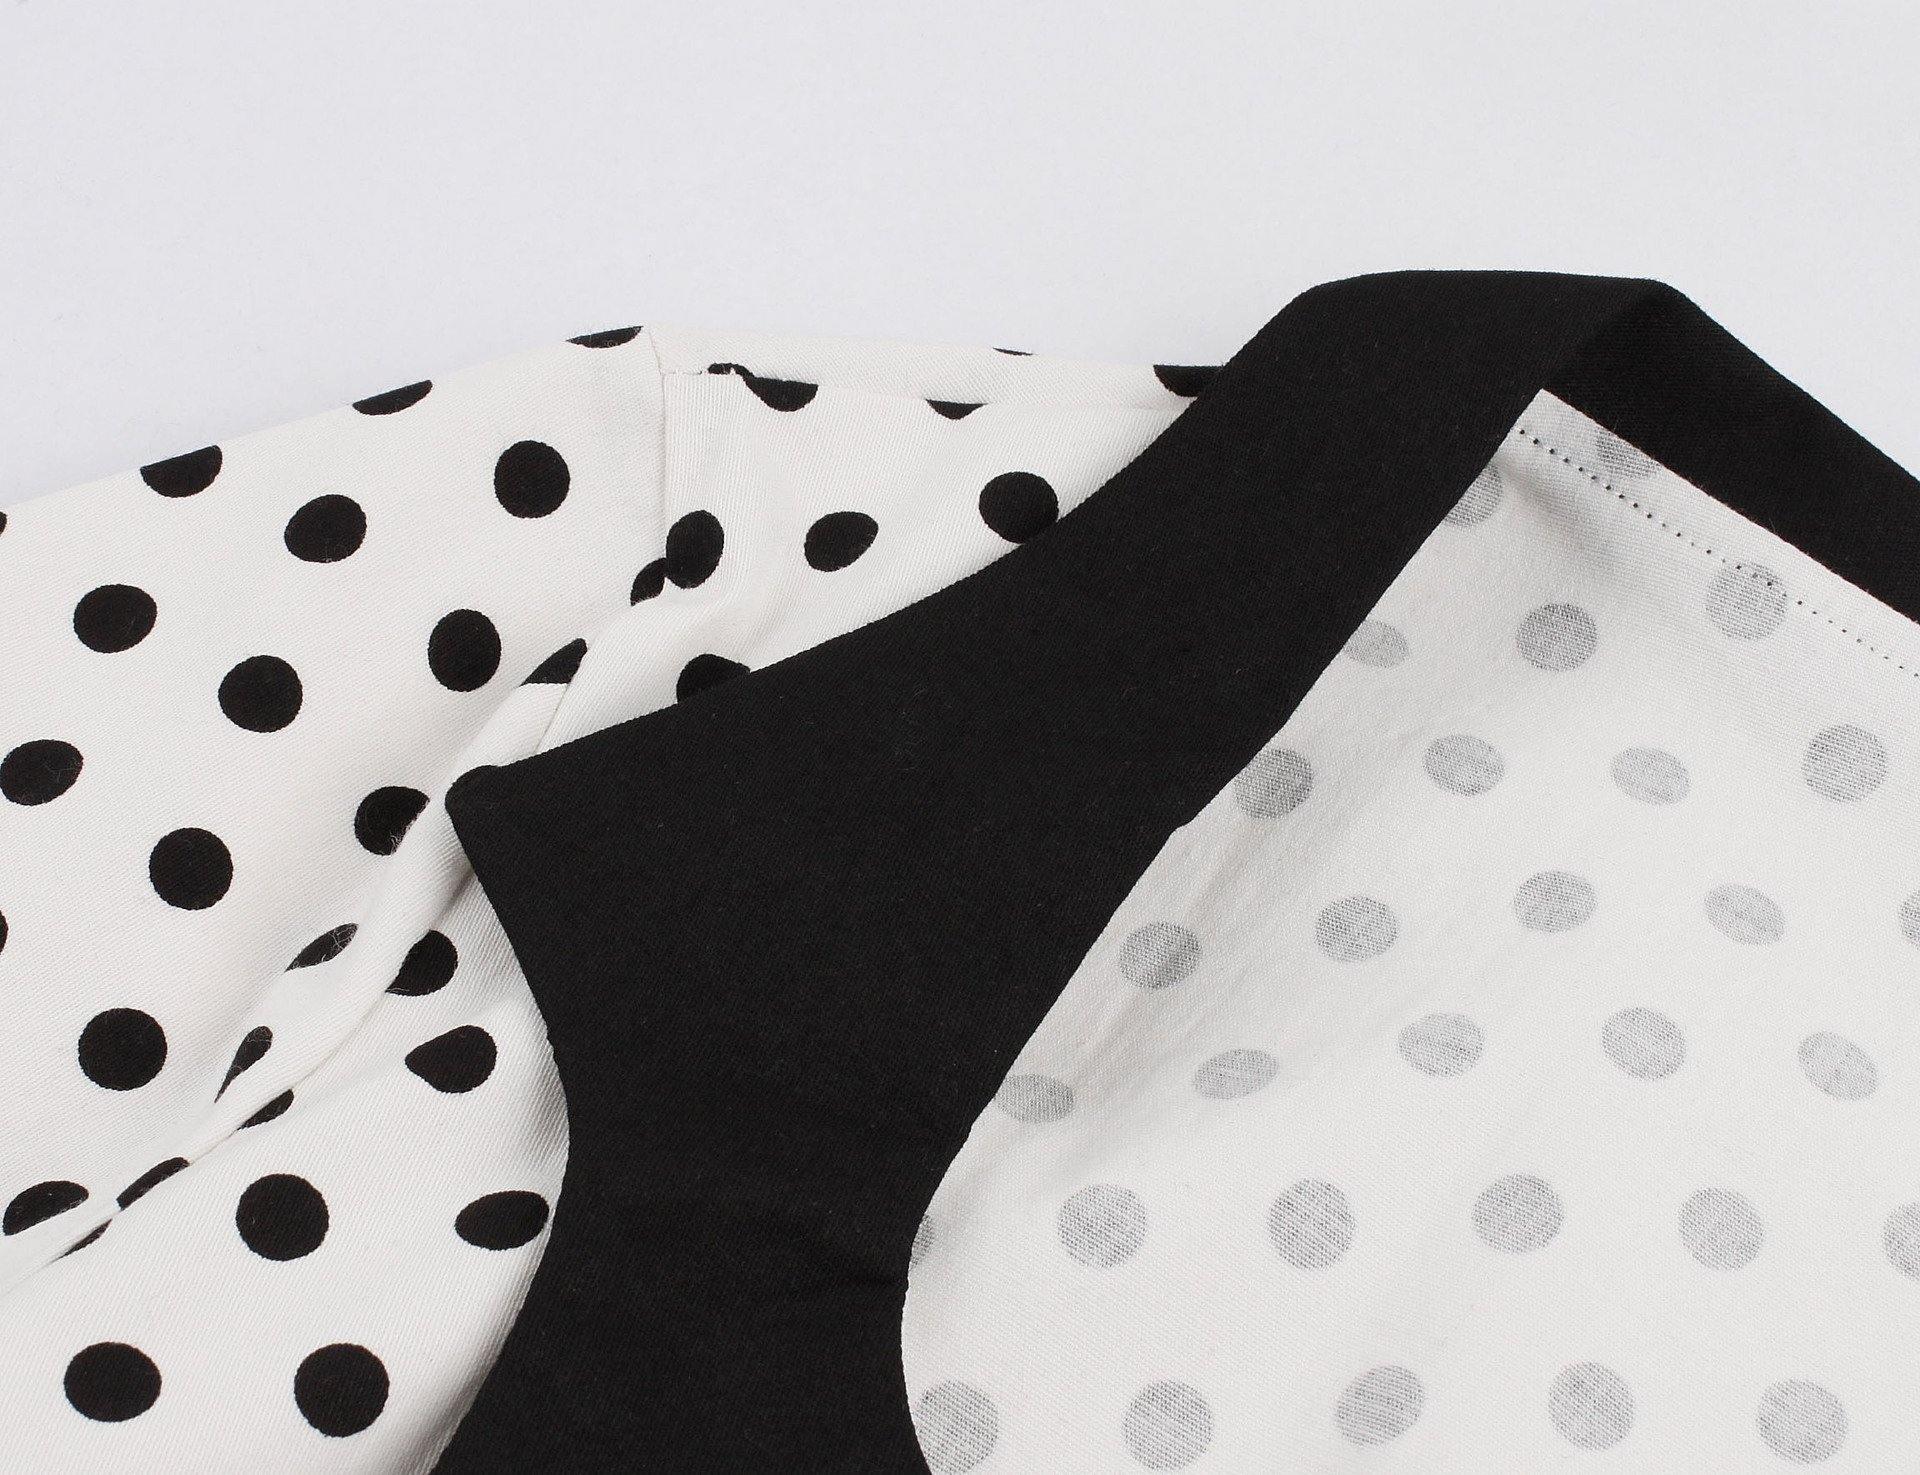 Square Neckline Dot Print Plus Size Retro Dresses-STYLEGOING